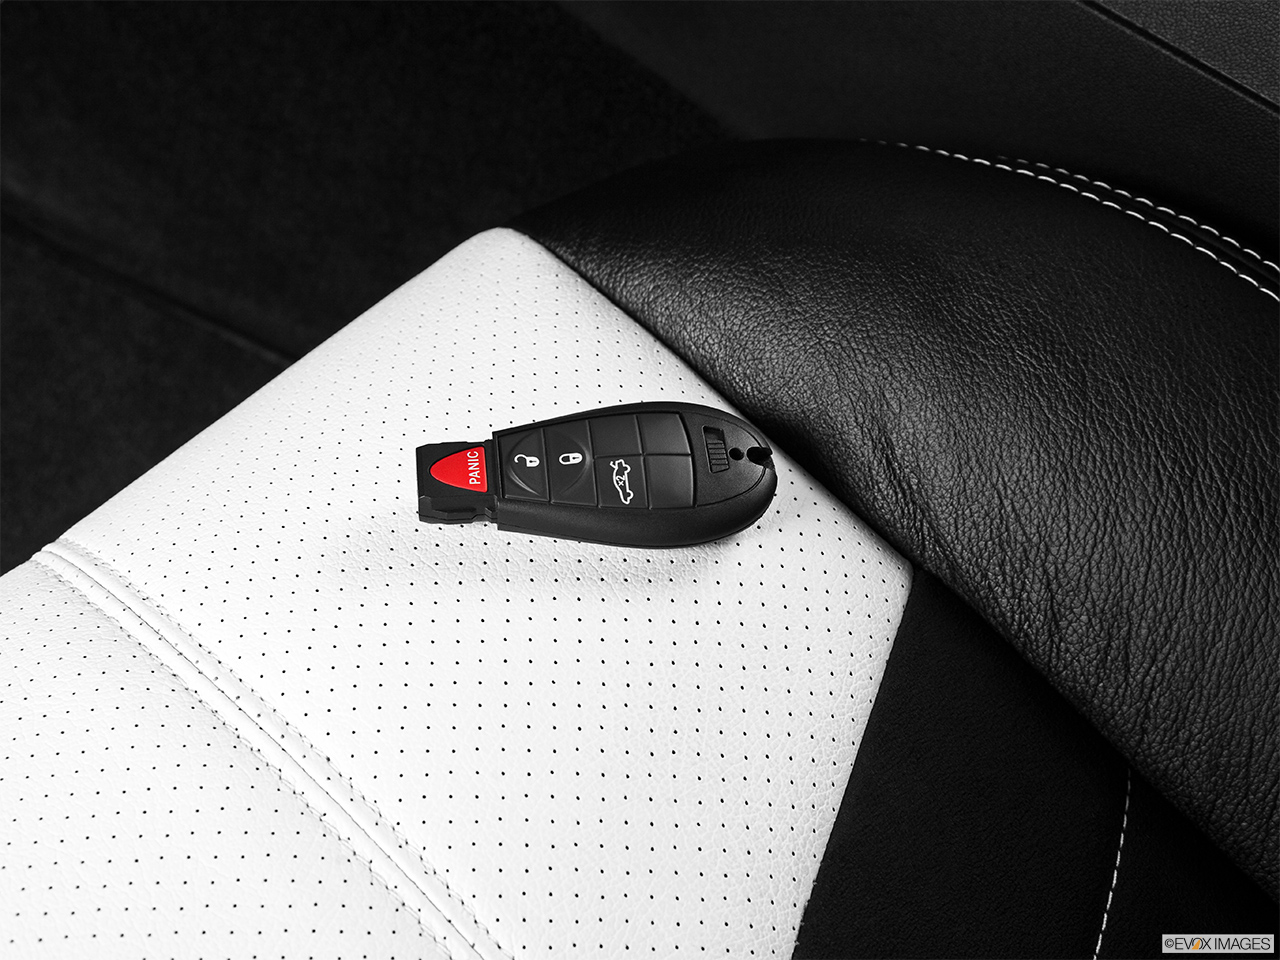 2014 Saleen 570 Challenger Label 570 Black Label Key fob on driver's seat. 